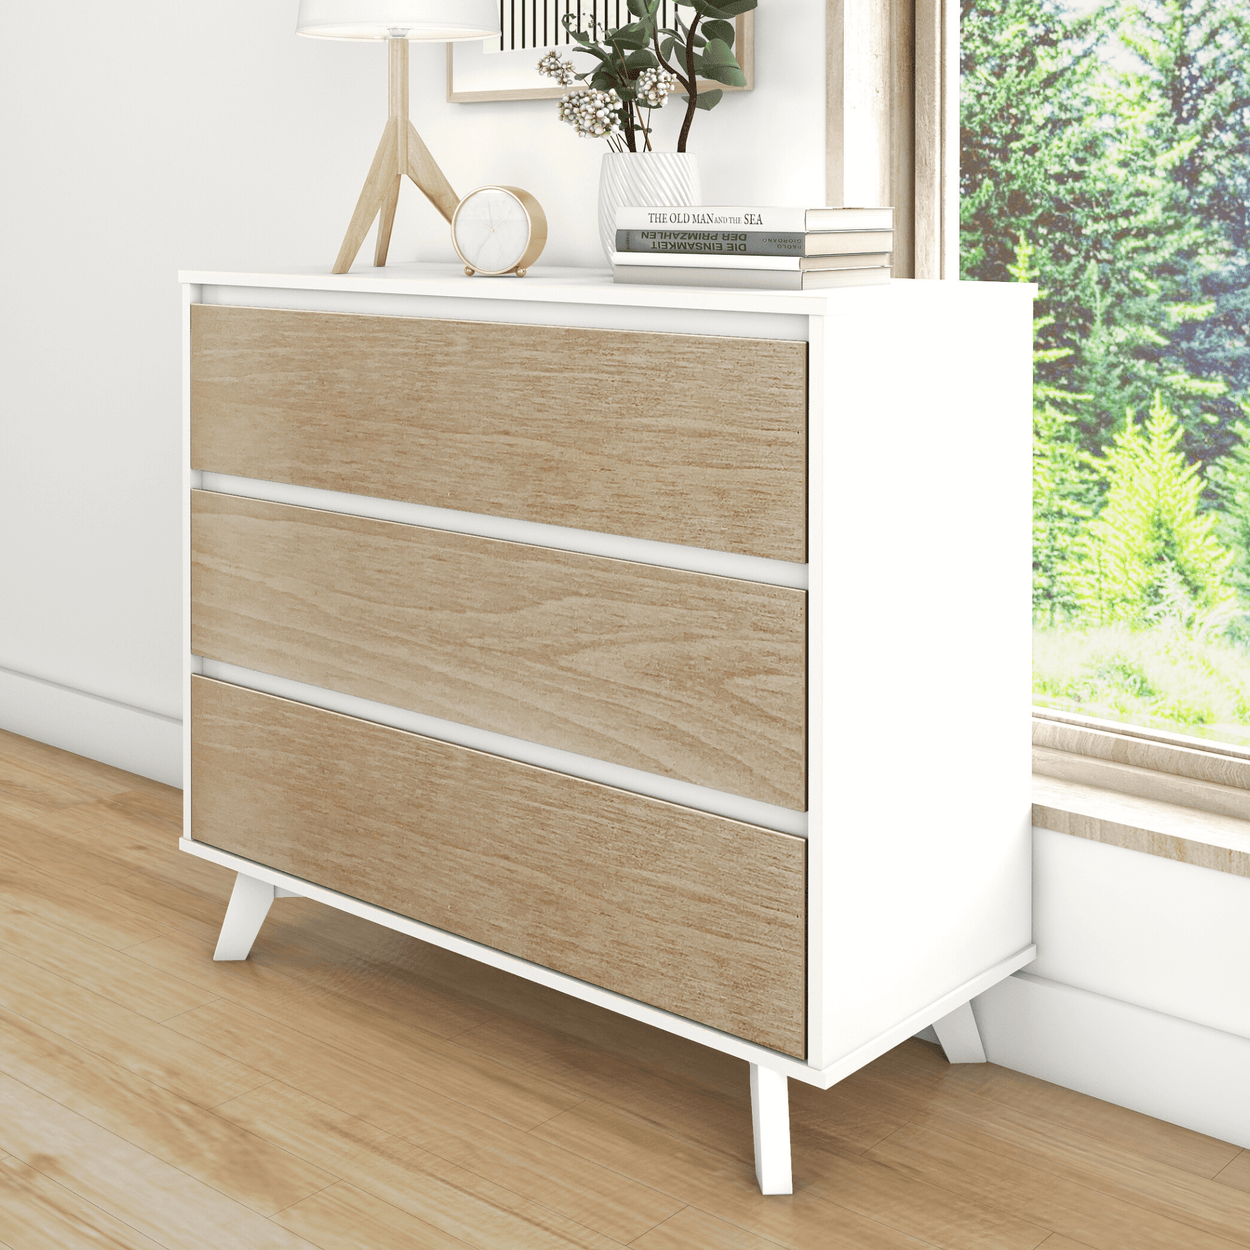 2100213000-202 : Furniture Scandinavian 3 Drawer Dresser, White/Blonde